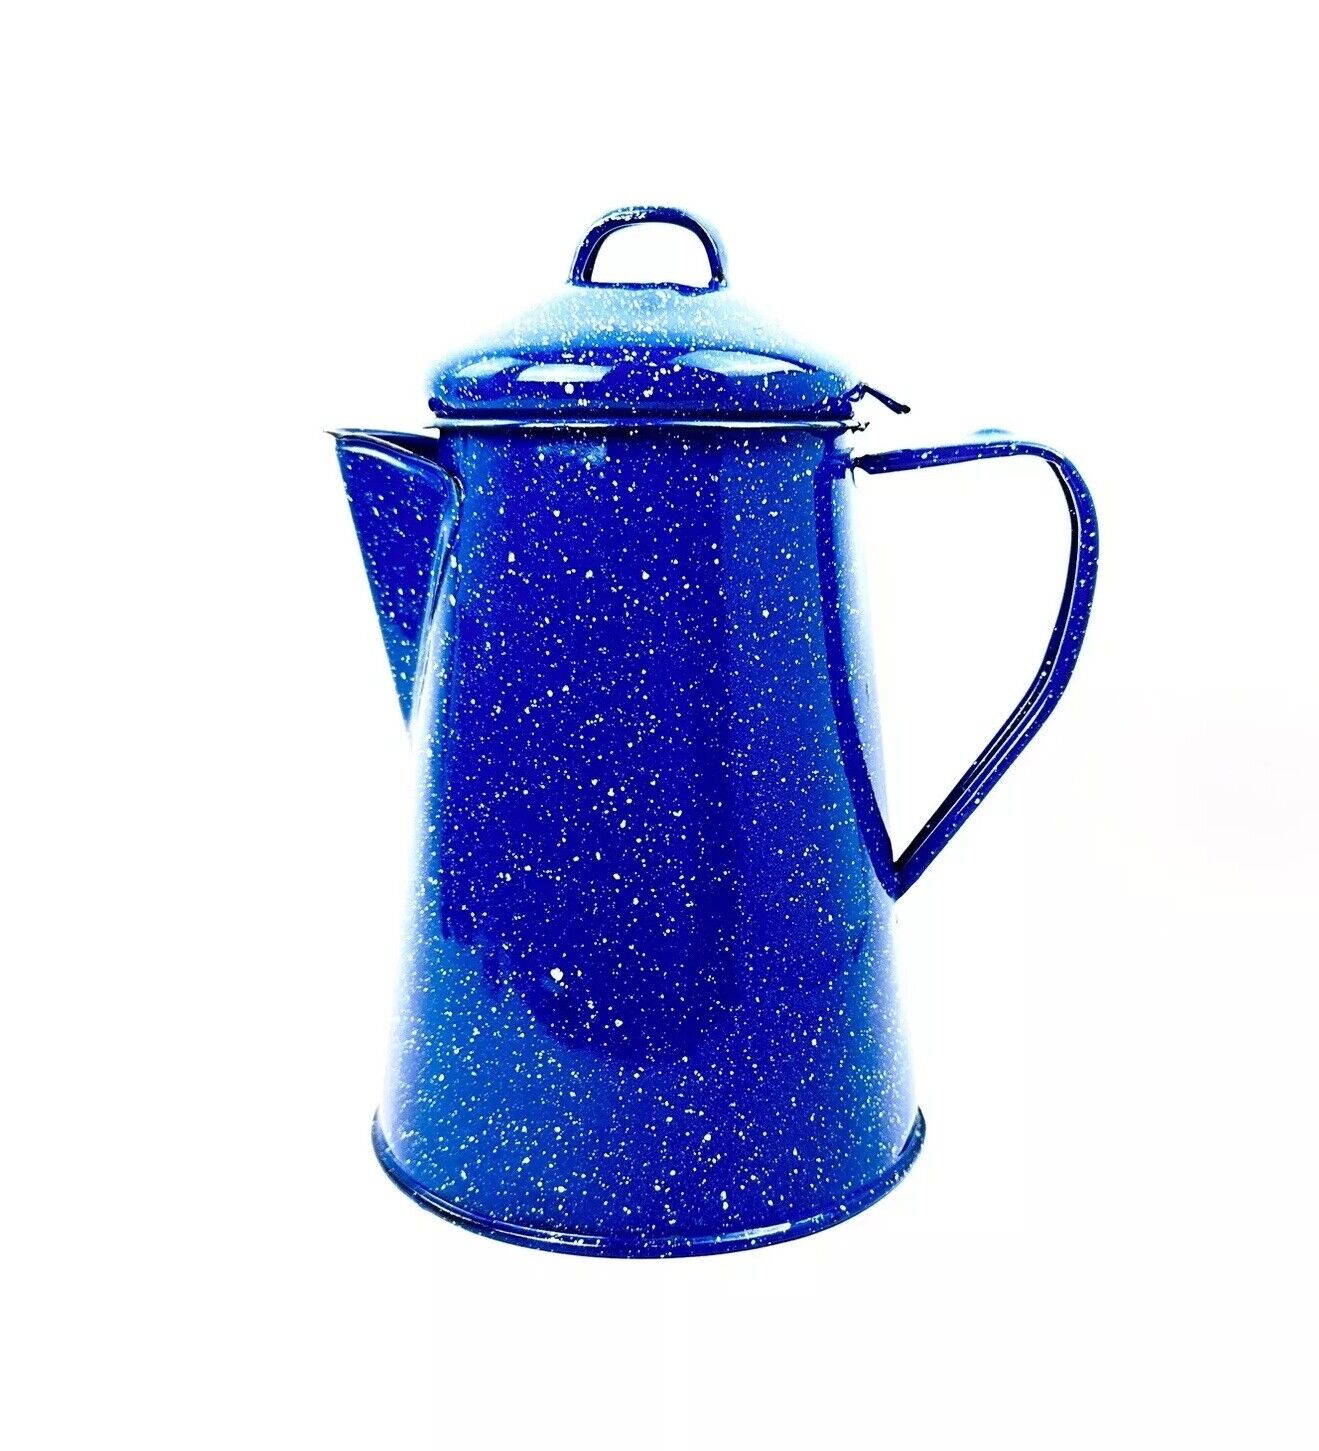 Vintage Enamel Ware Blue White Speckled Camping/Cowboy Coffee Pot Kettle 1 Liter